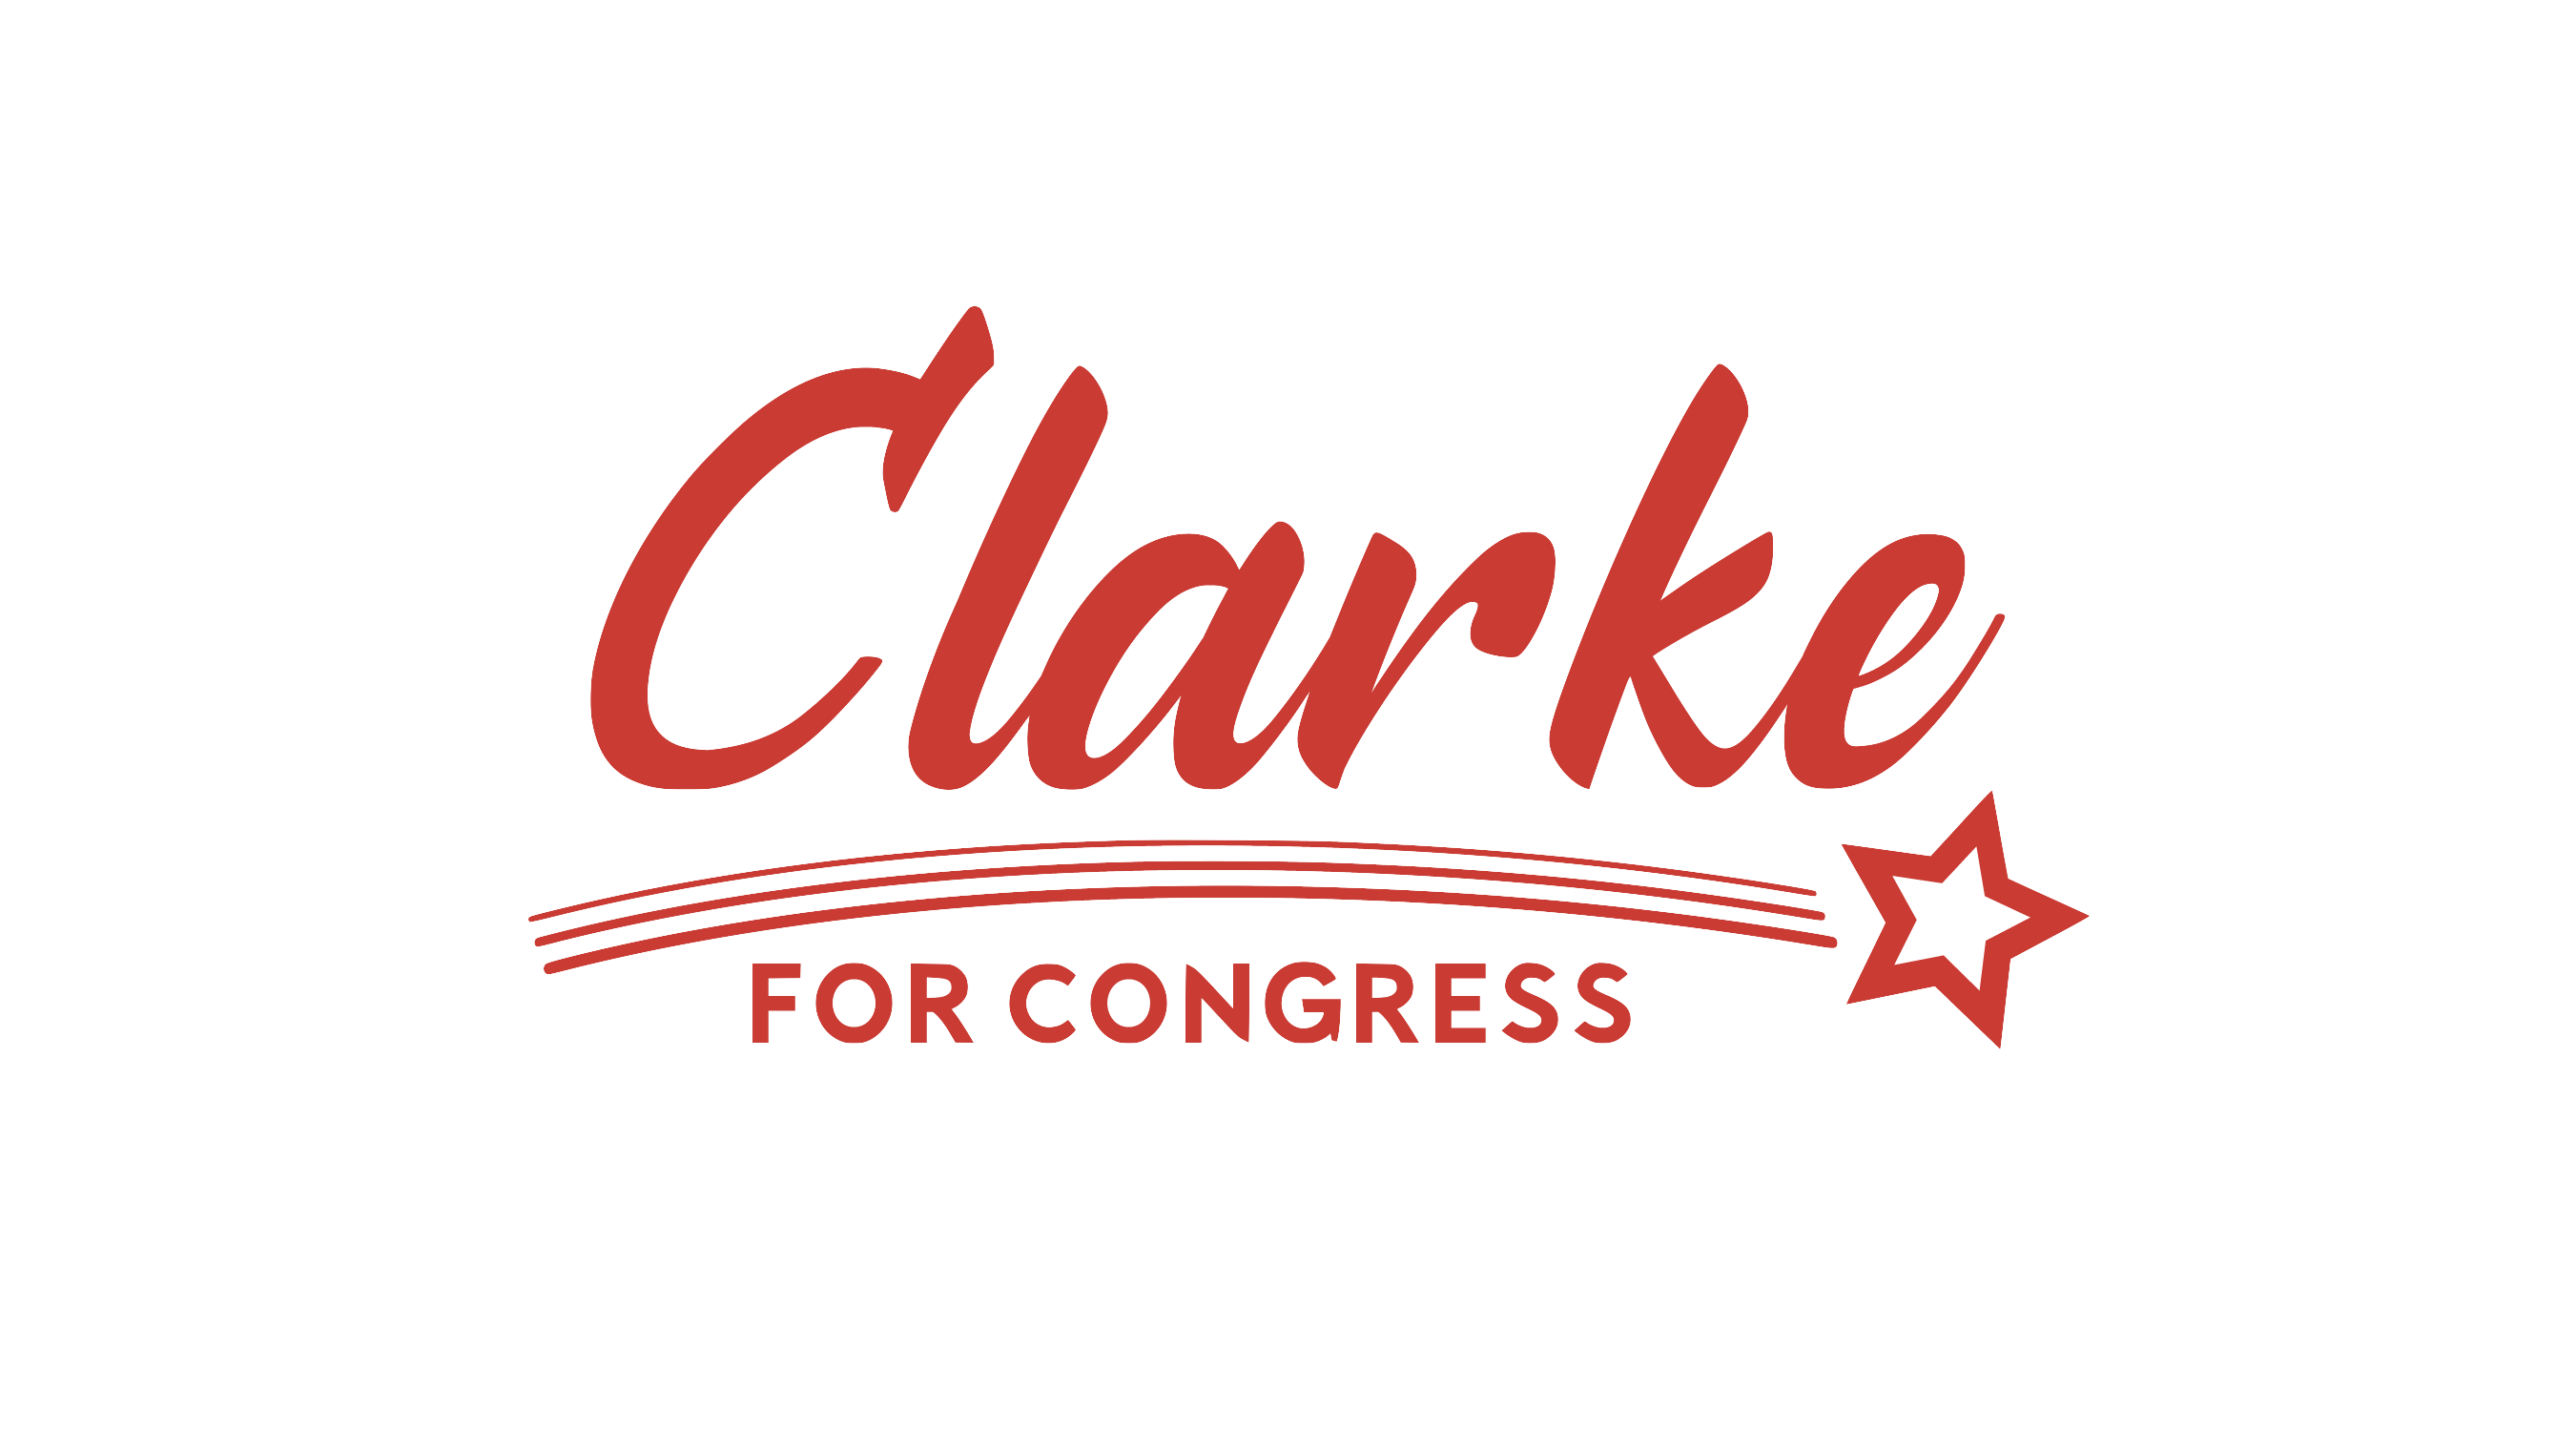 Clarke for Congress